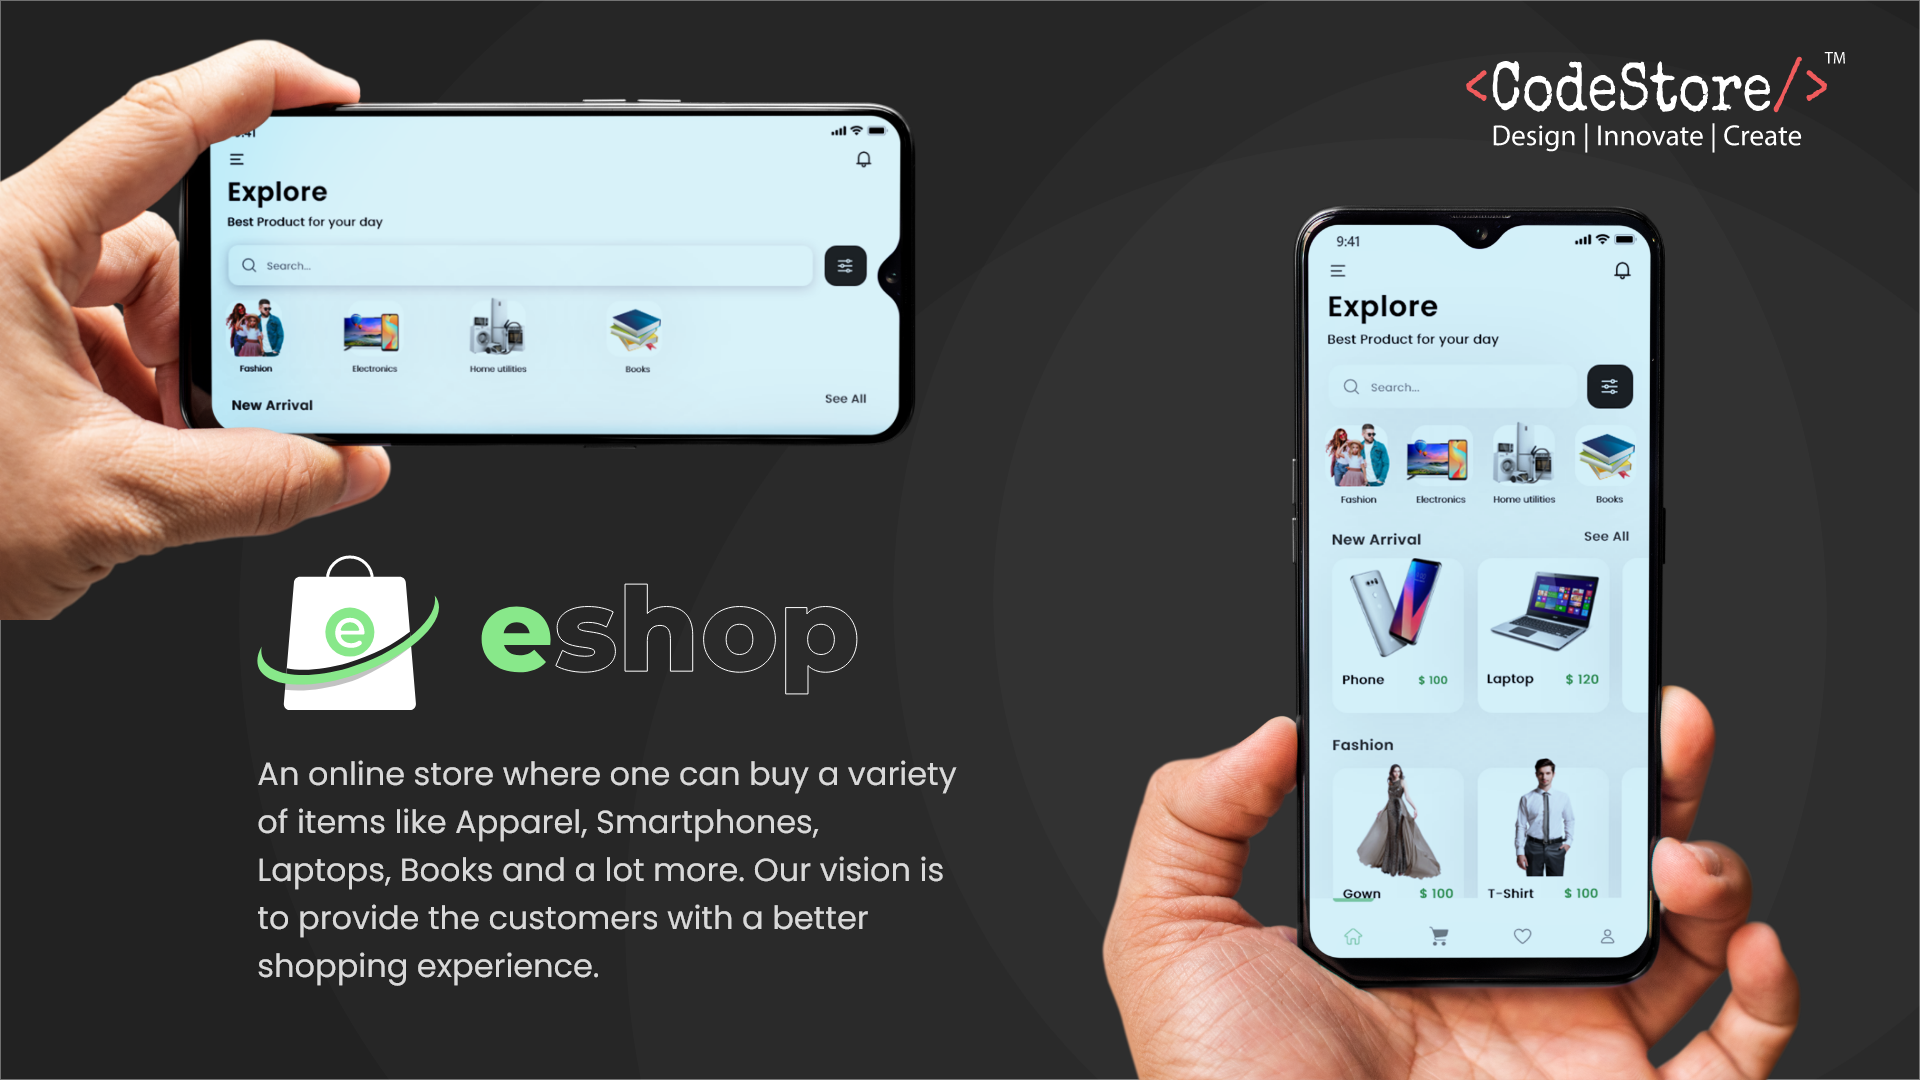 eShop | CaseStudy